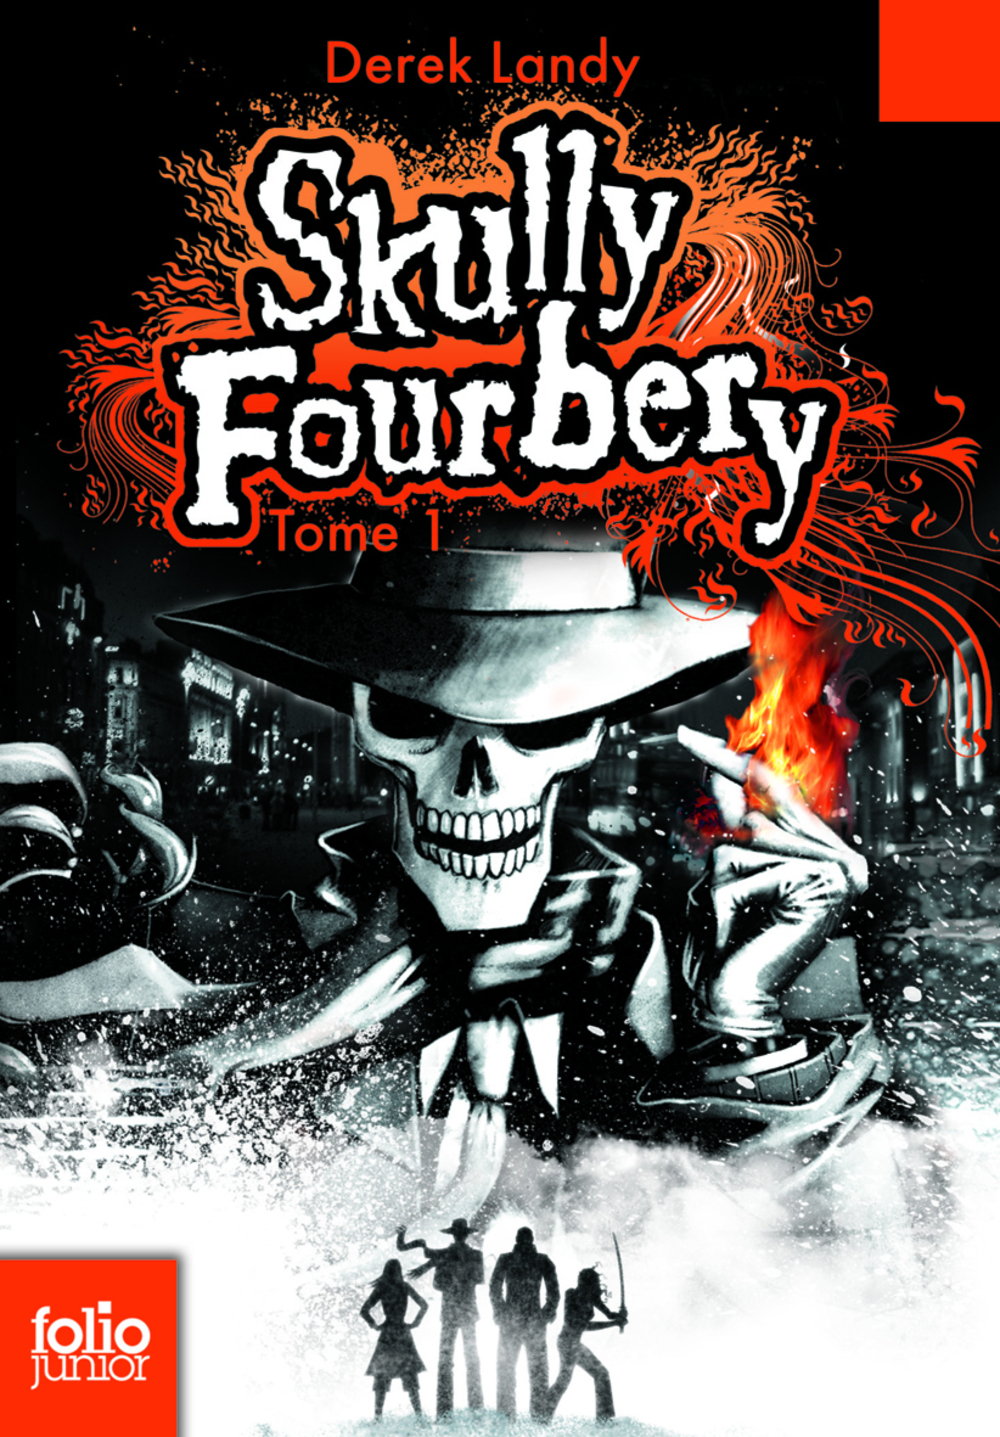 Skully Fourbery (Tome 1)